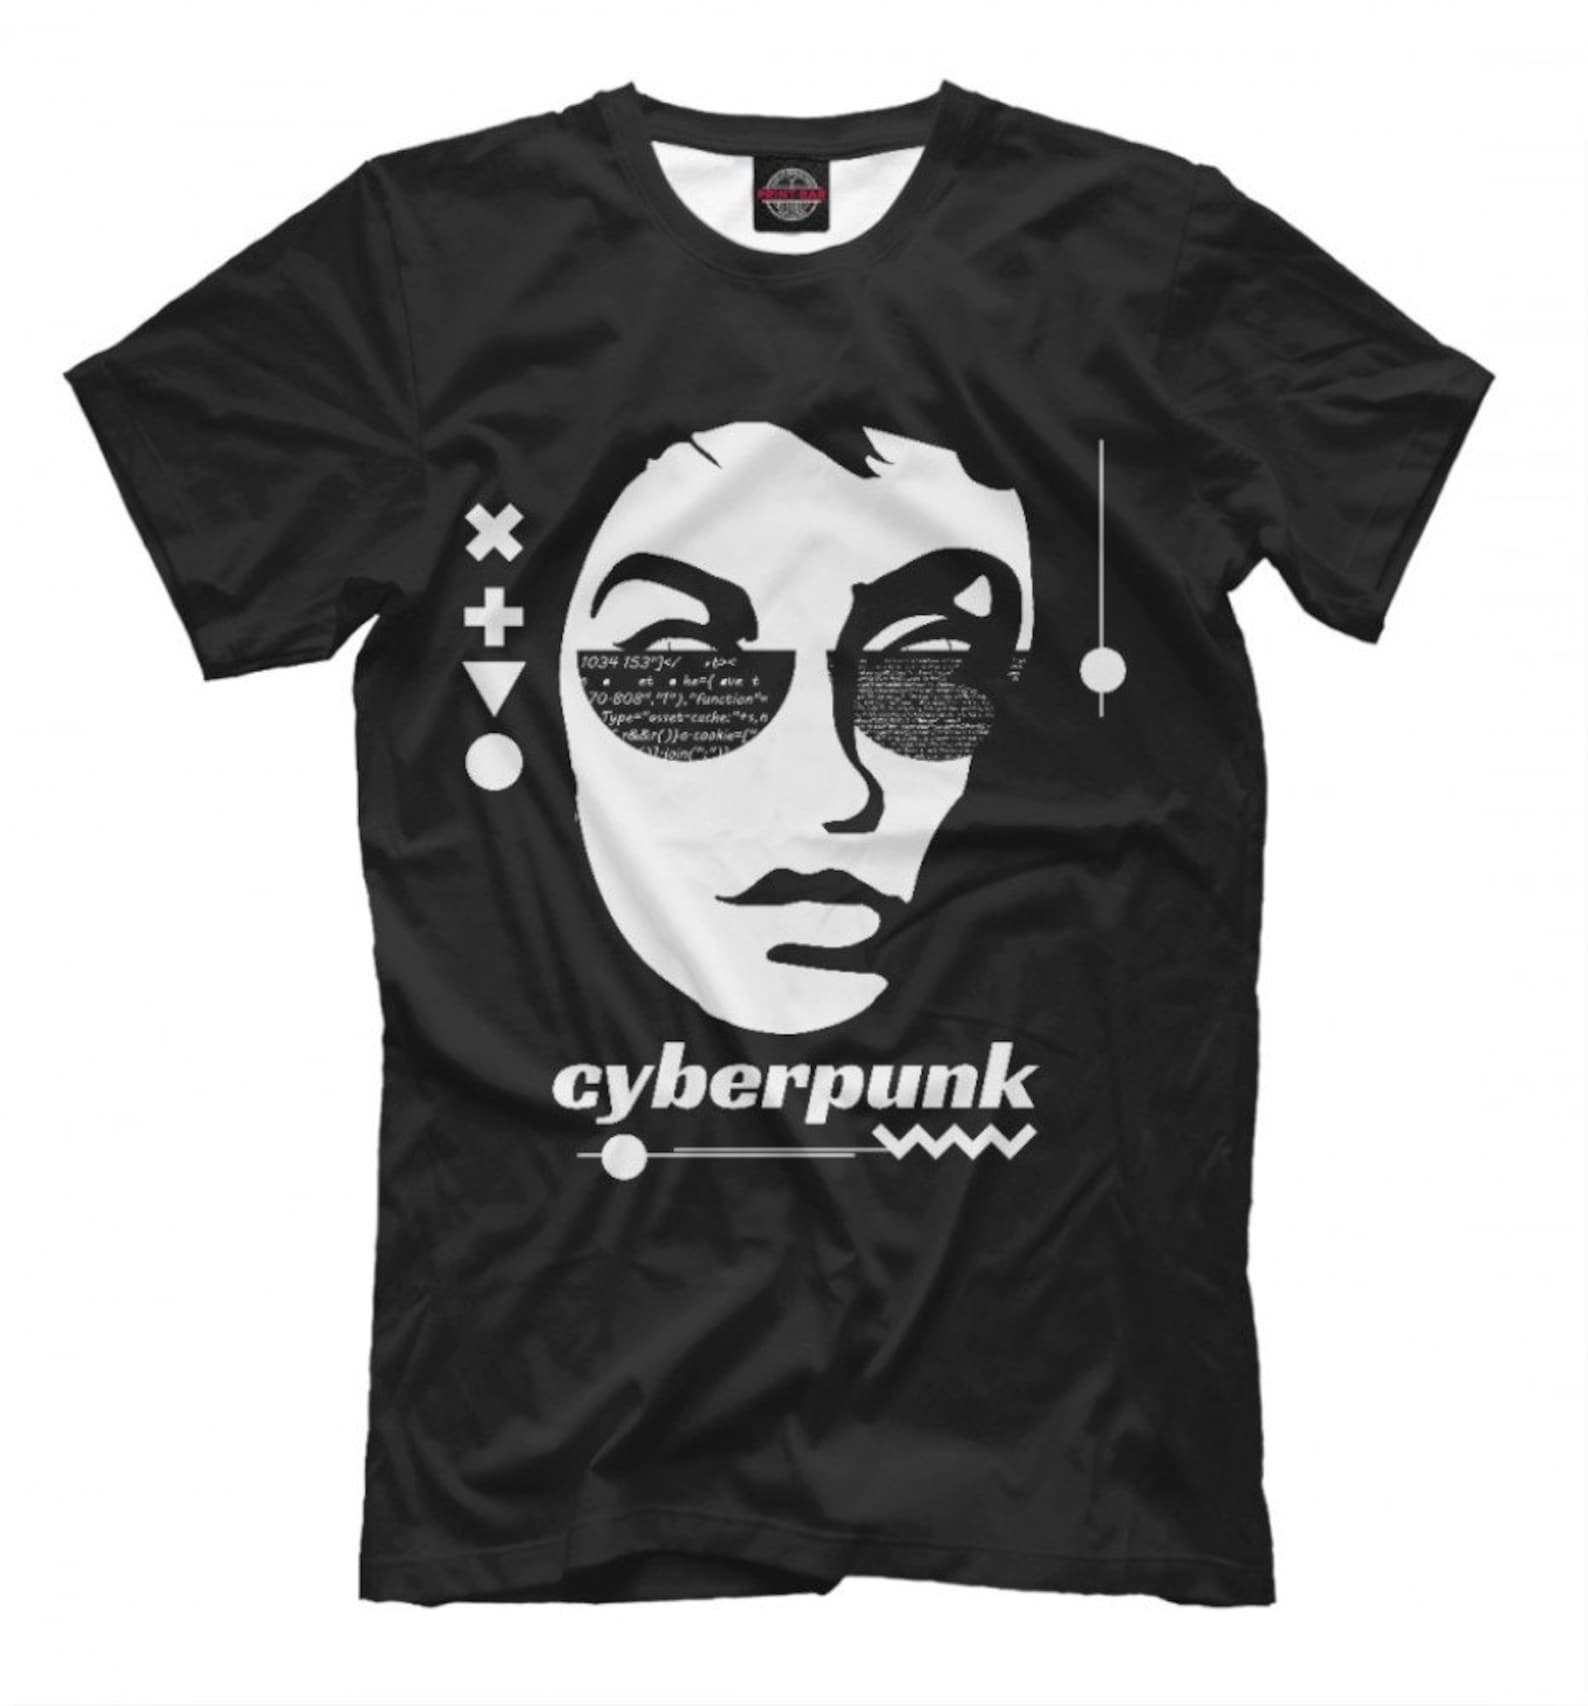 Cyberpunk samurai t shirt фото 111